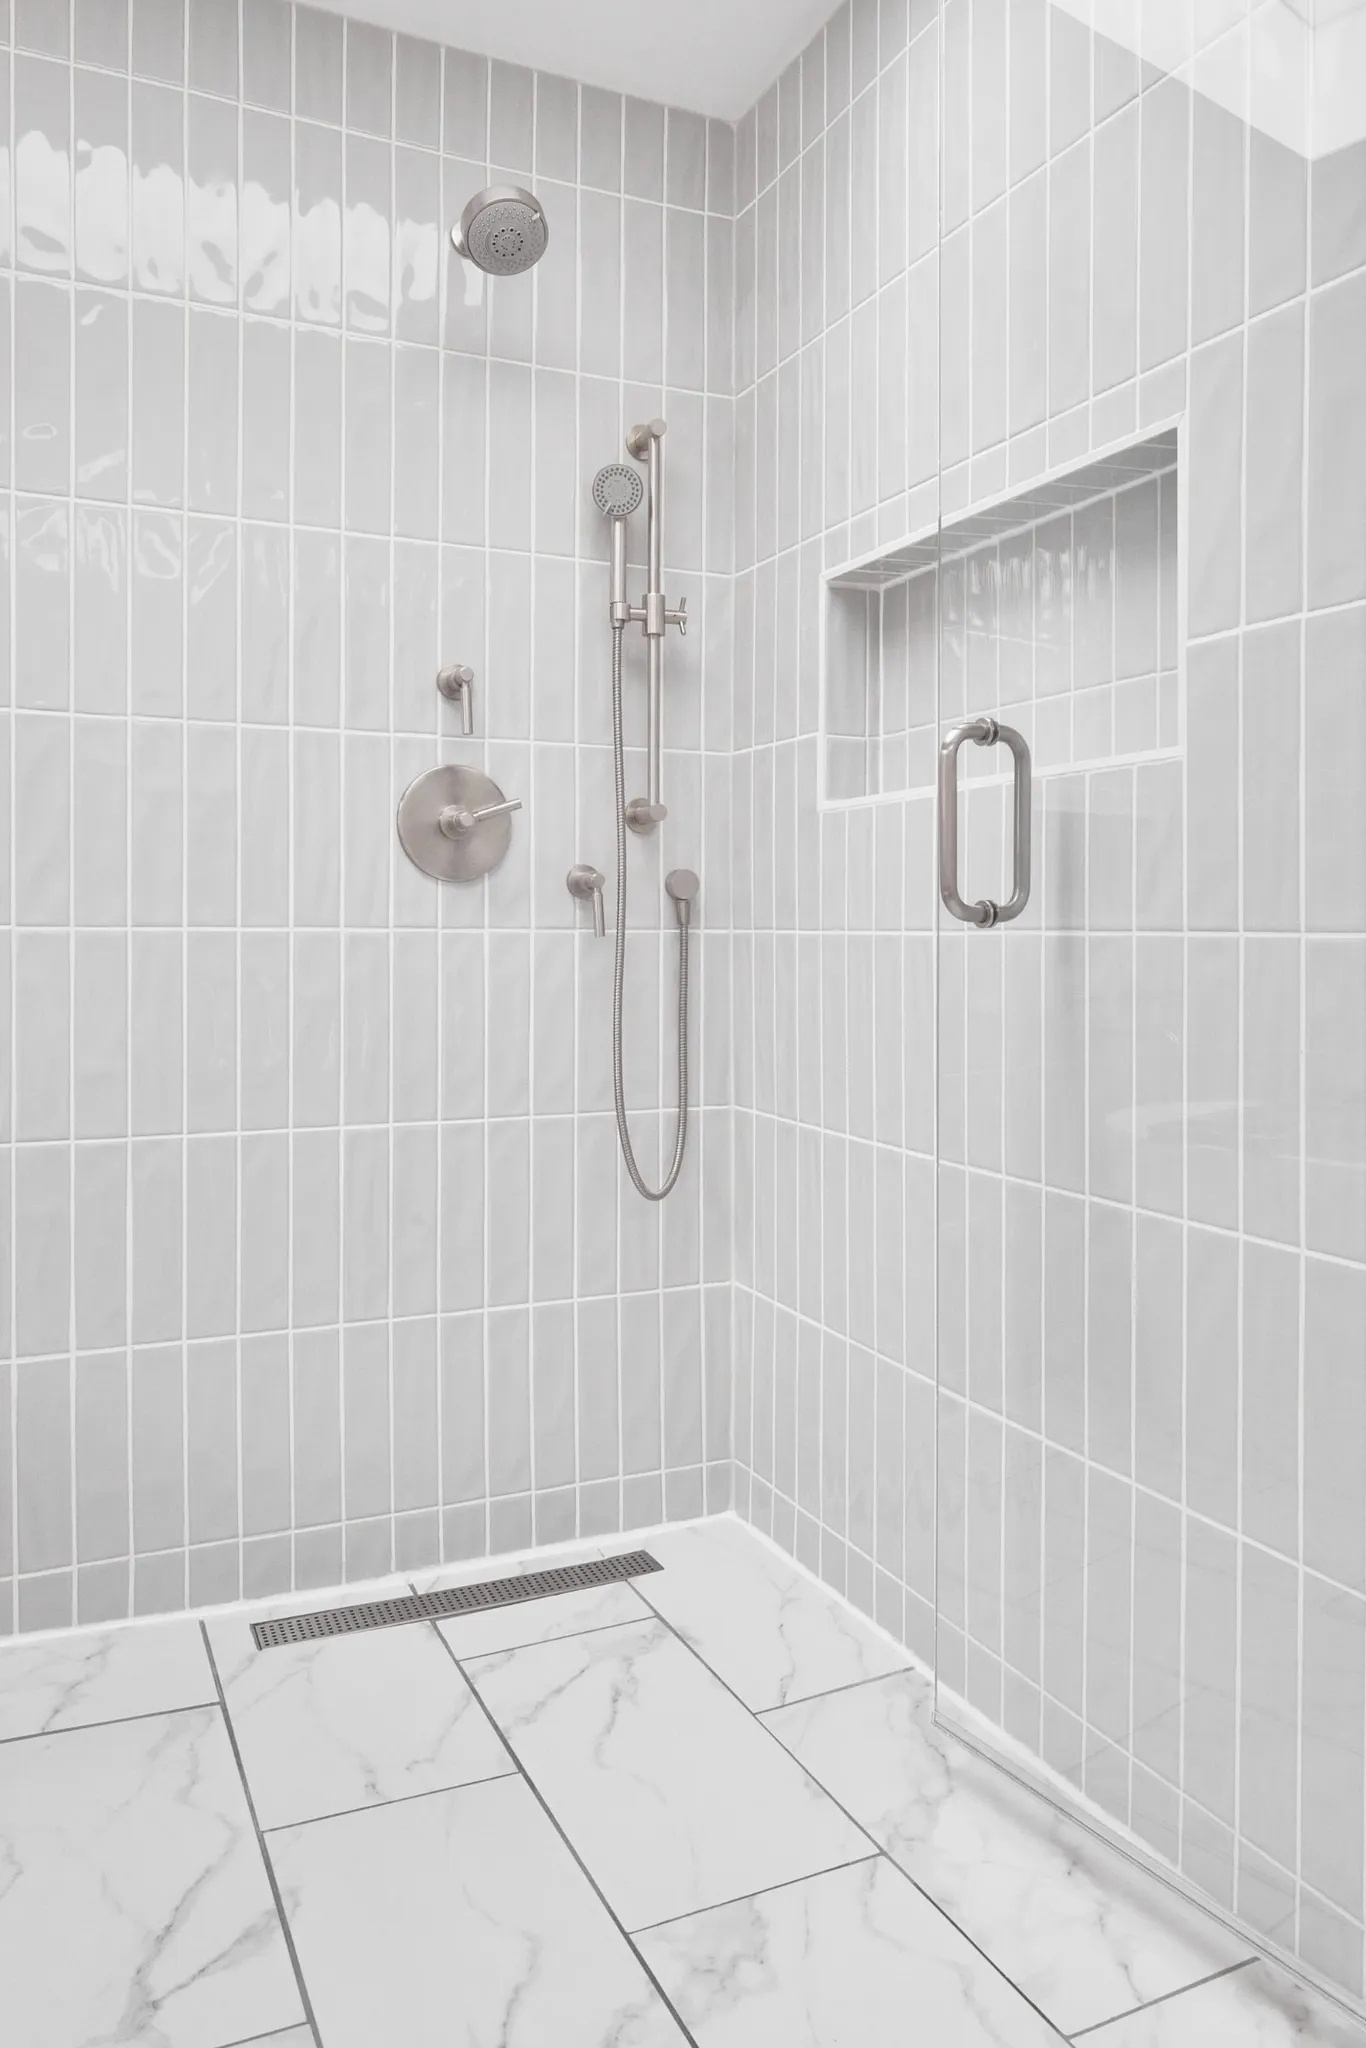 Paradise Valley, AZ master bathroom - Wet room shower area